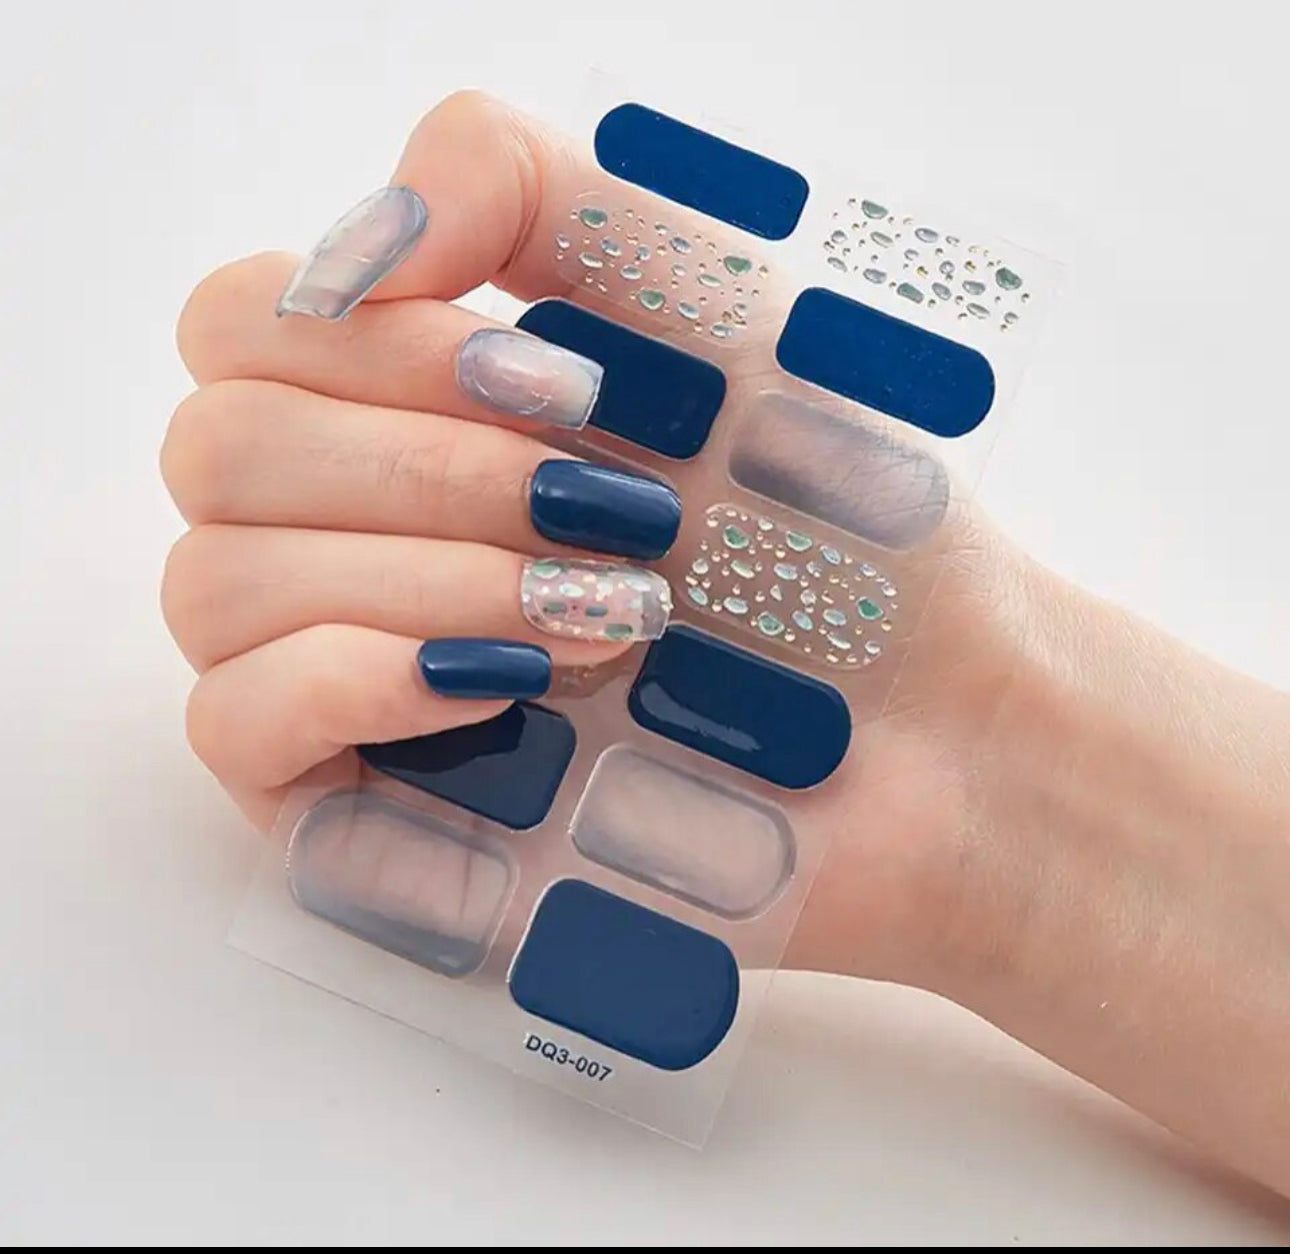 14 nail set with pattern